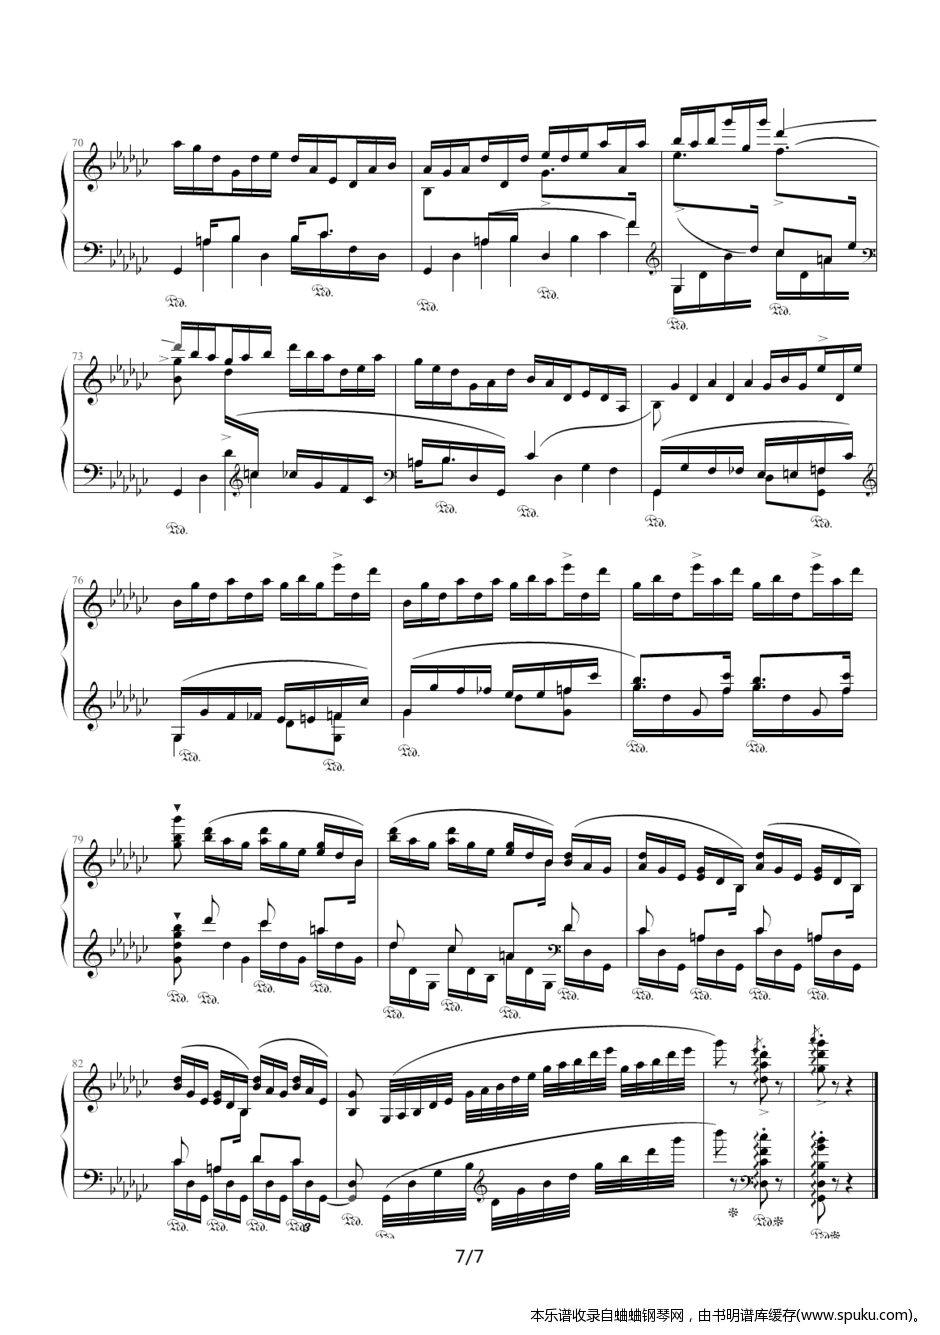 FrChopin7-钢琴谱-曲谱